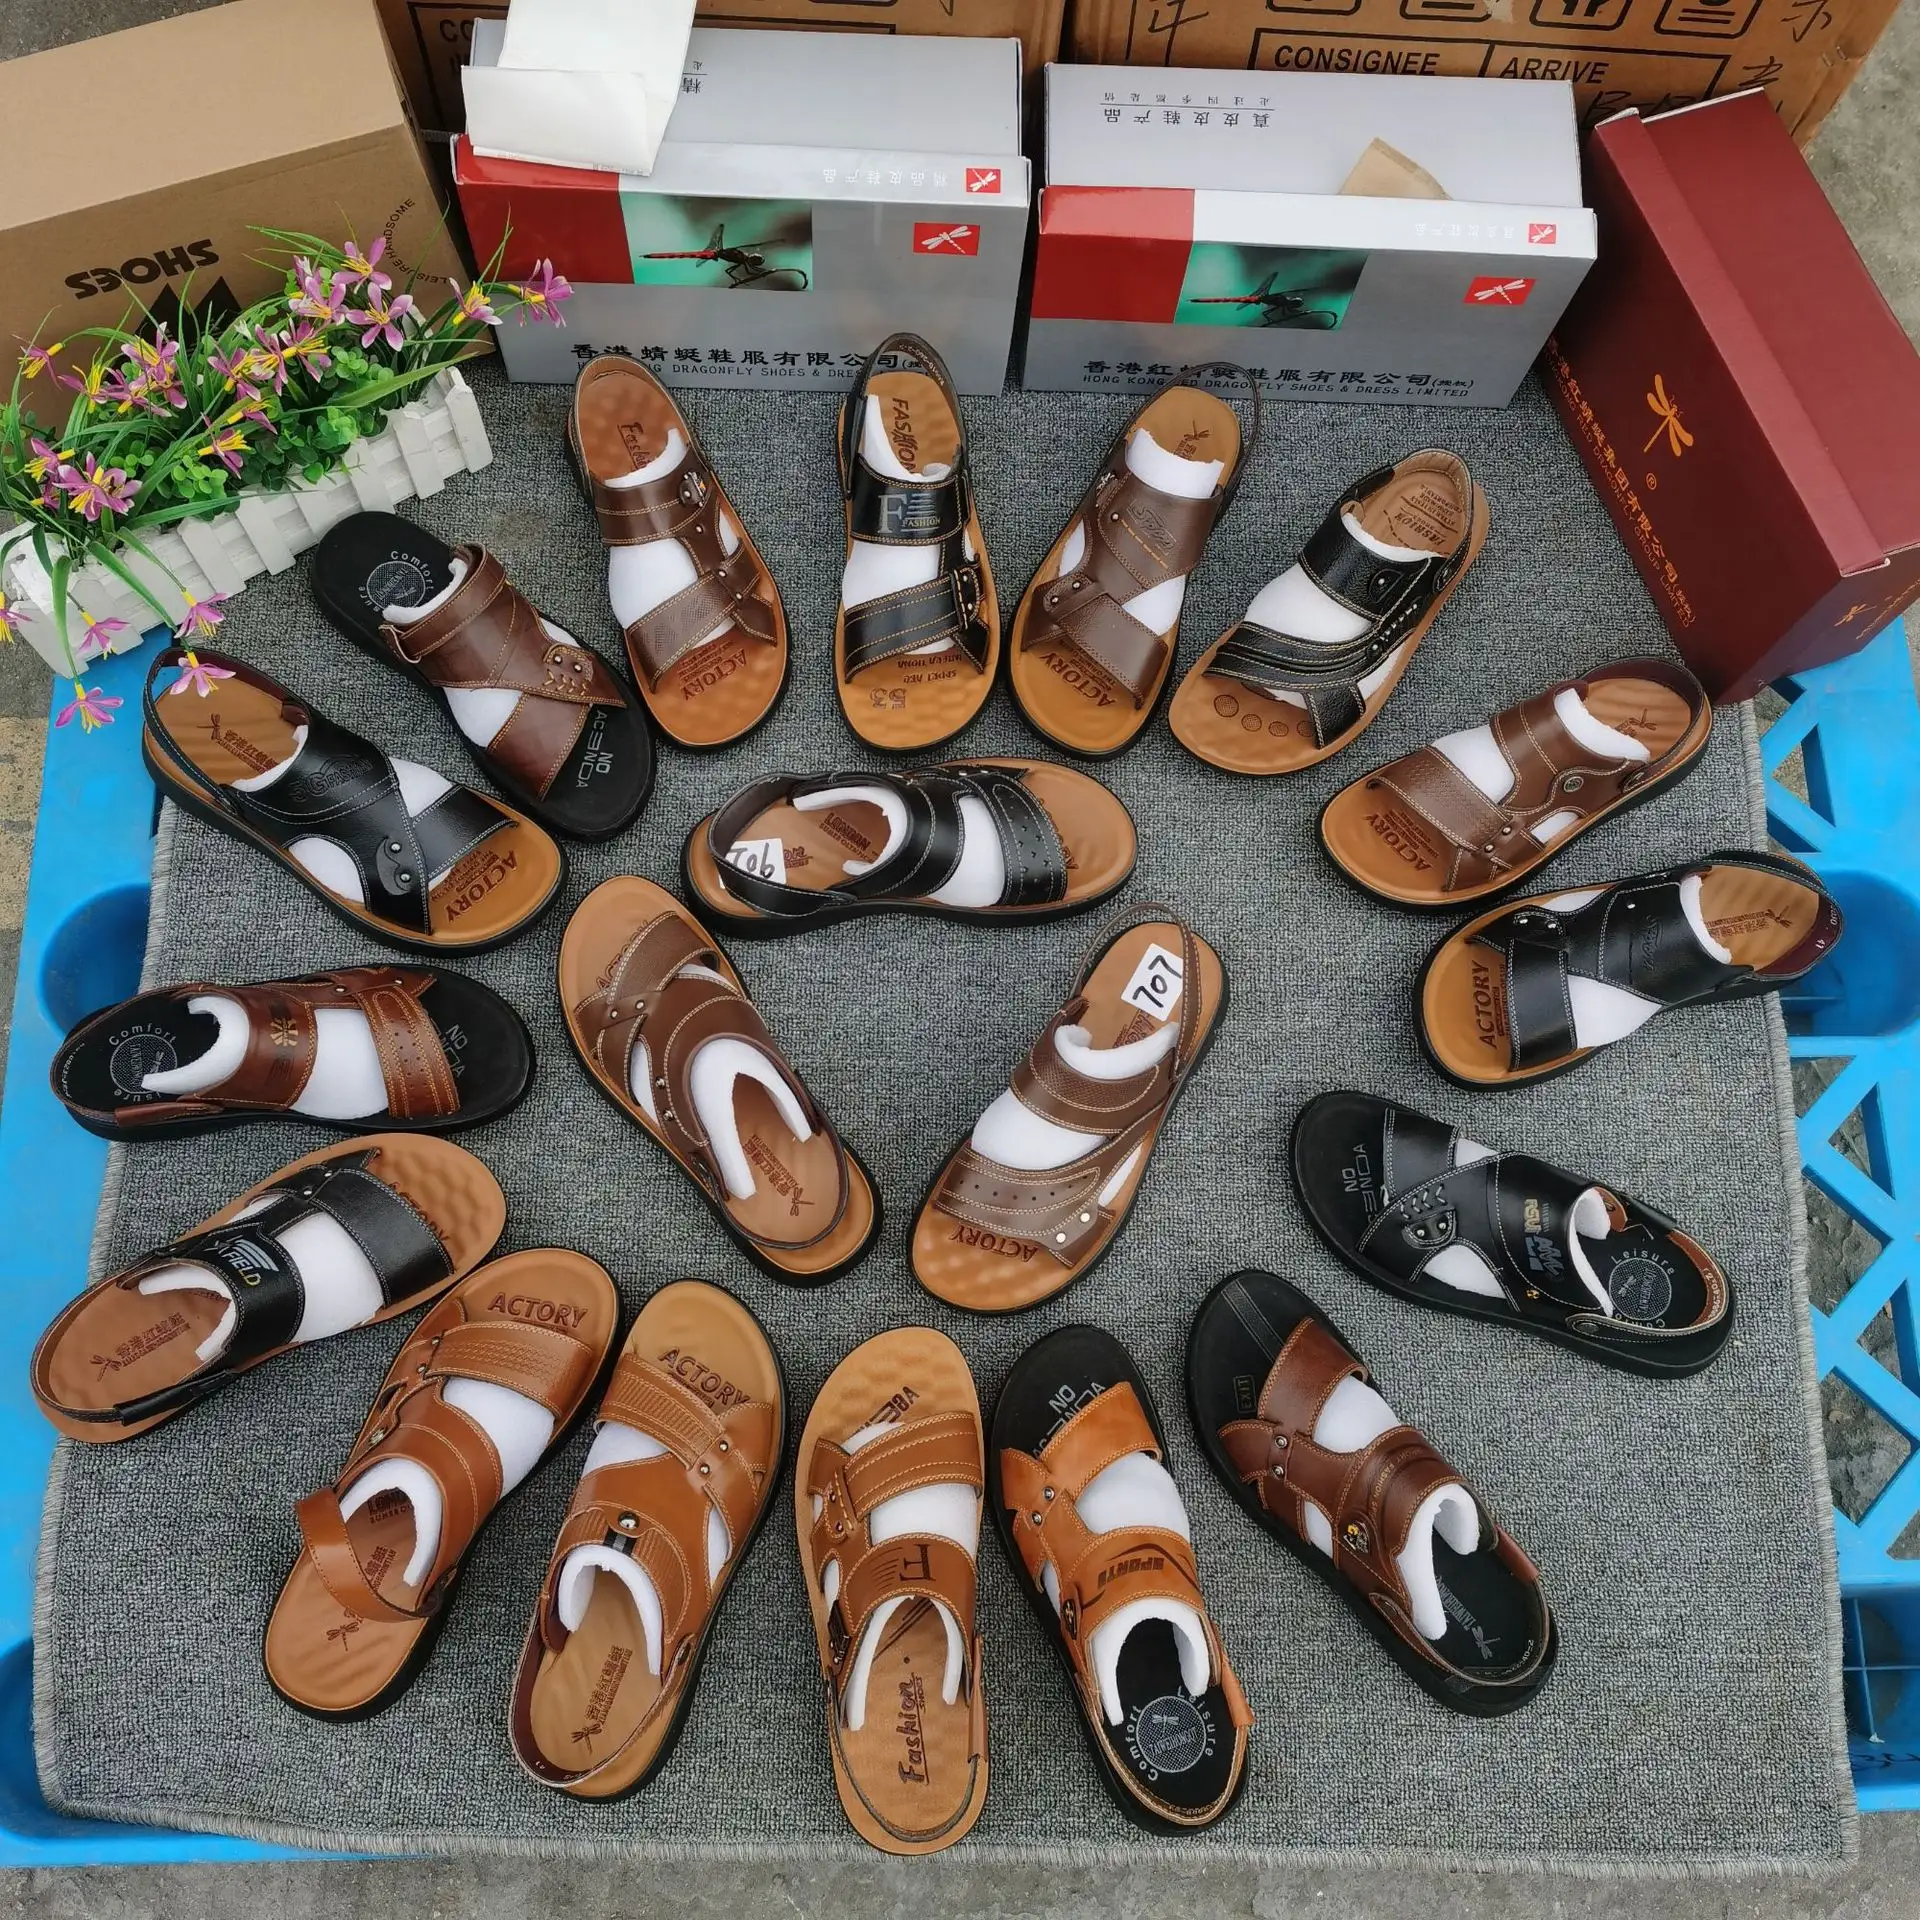 Stock Shoes Orginal White Plain Sneakers Cheap Price Zapatillas Mas Baratas Sports Lots Casual Stock